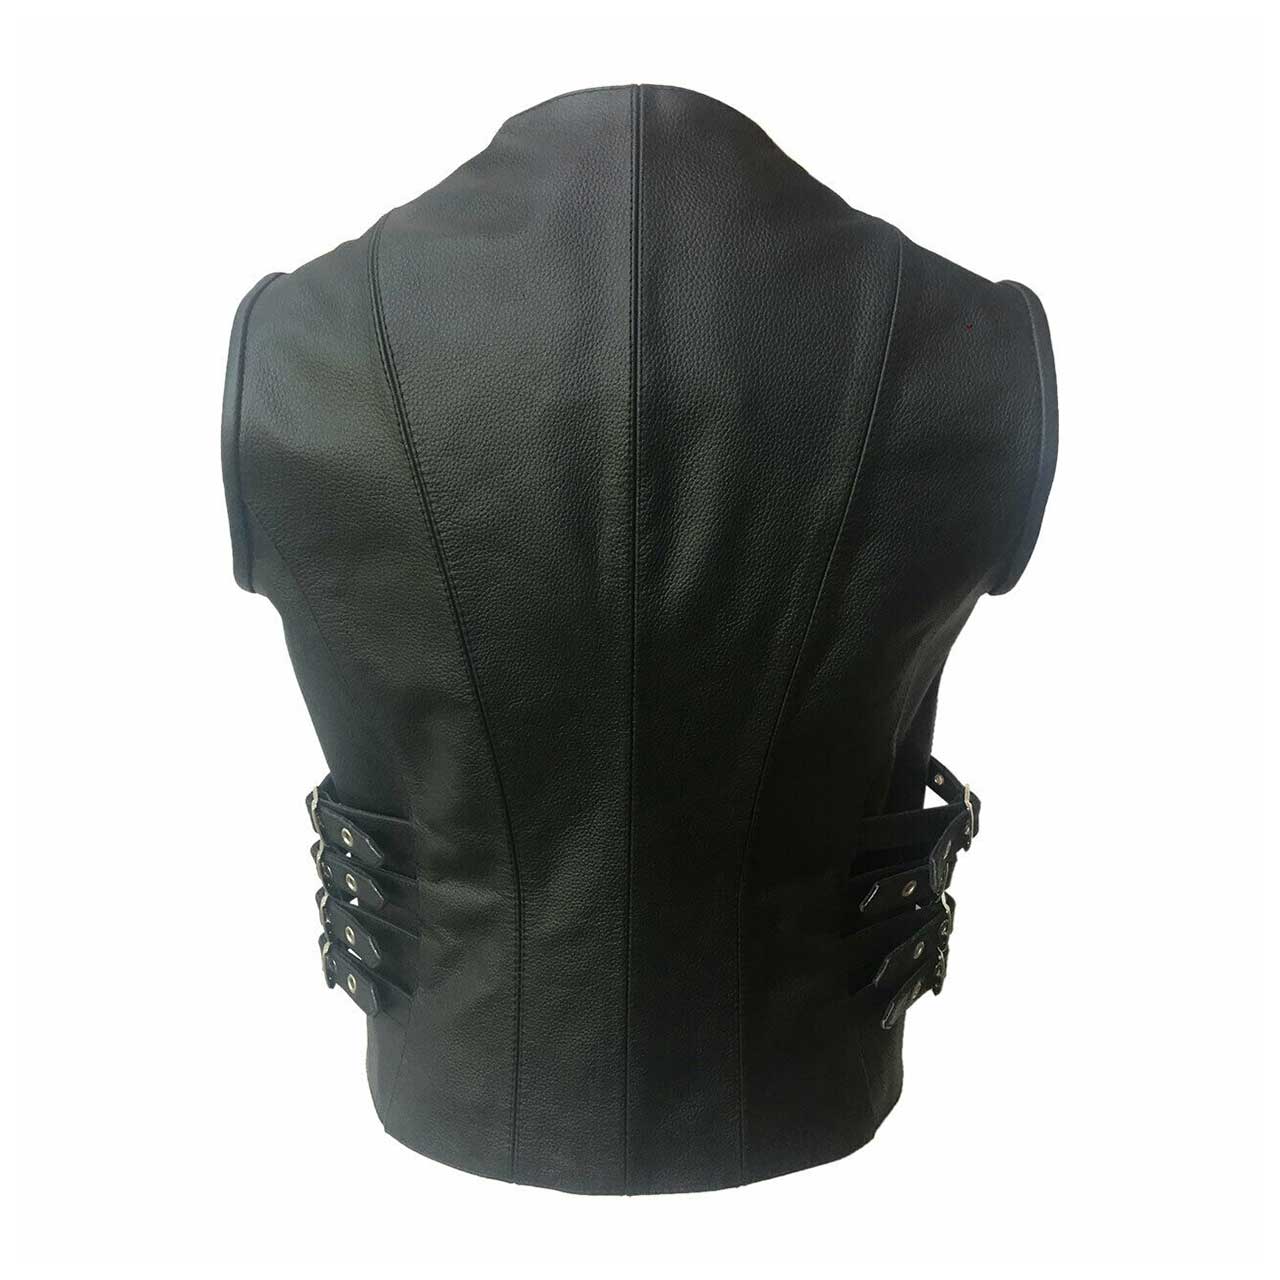 Womens Bikers Style Waistcoat Black Leather Vest - W7-BLK